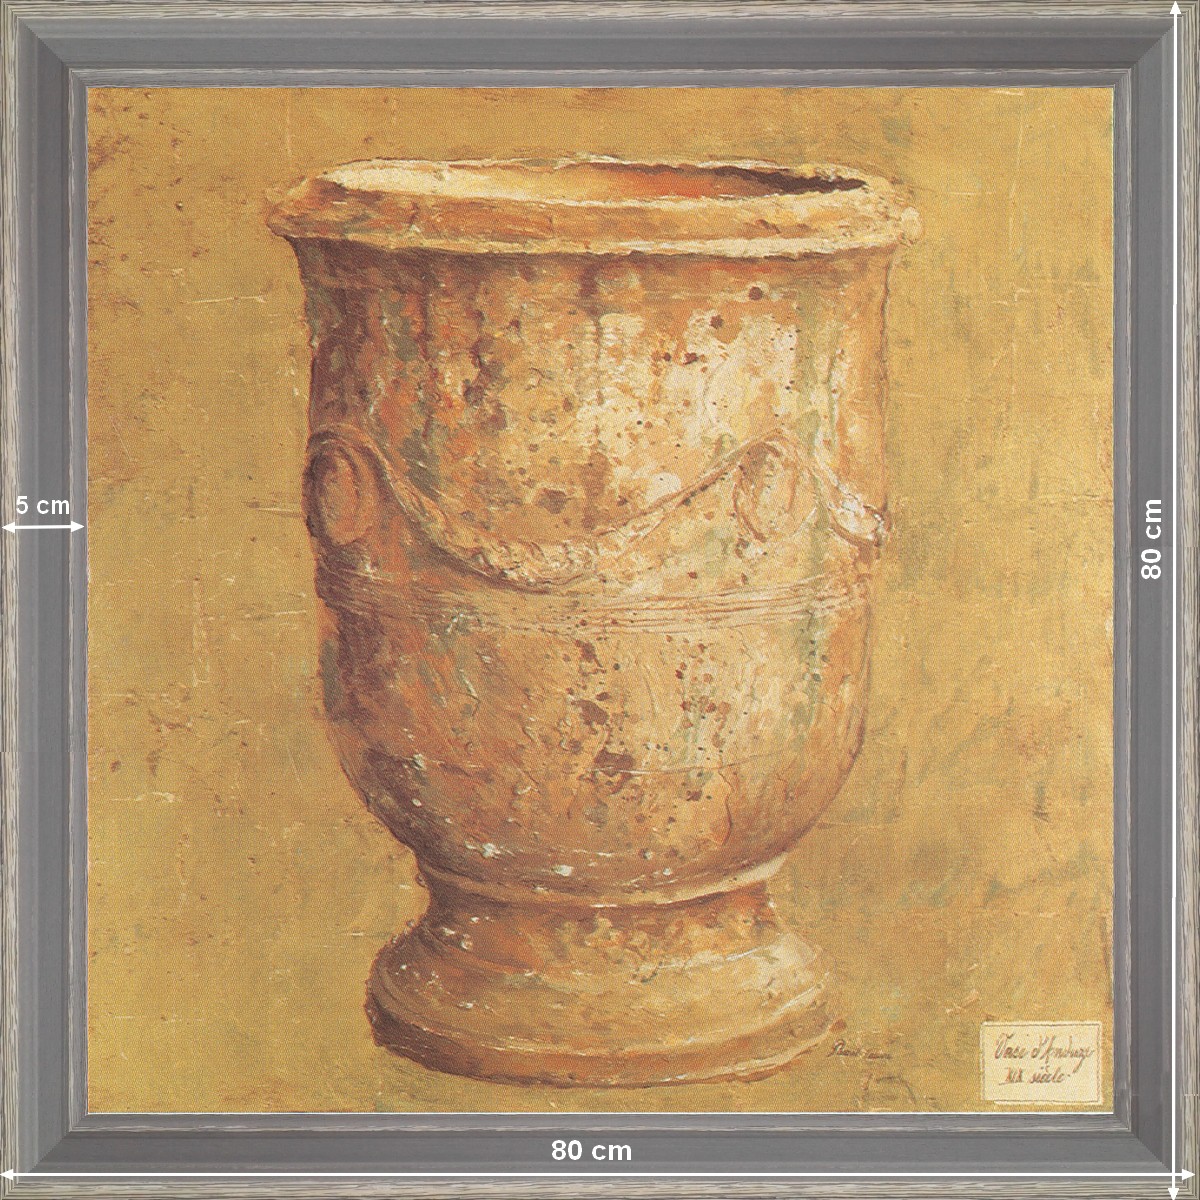 Anduze vase - dimensions 80 x 80 cm - Grey